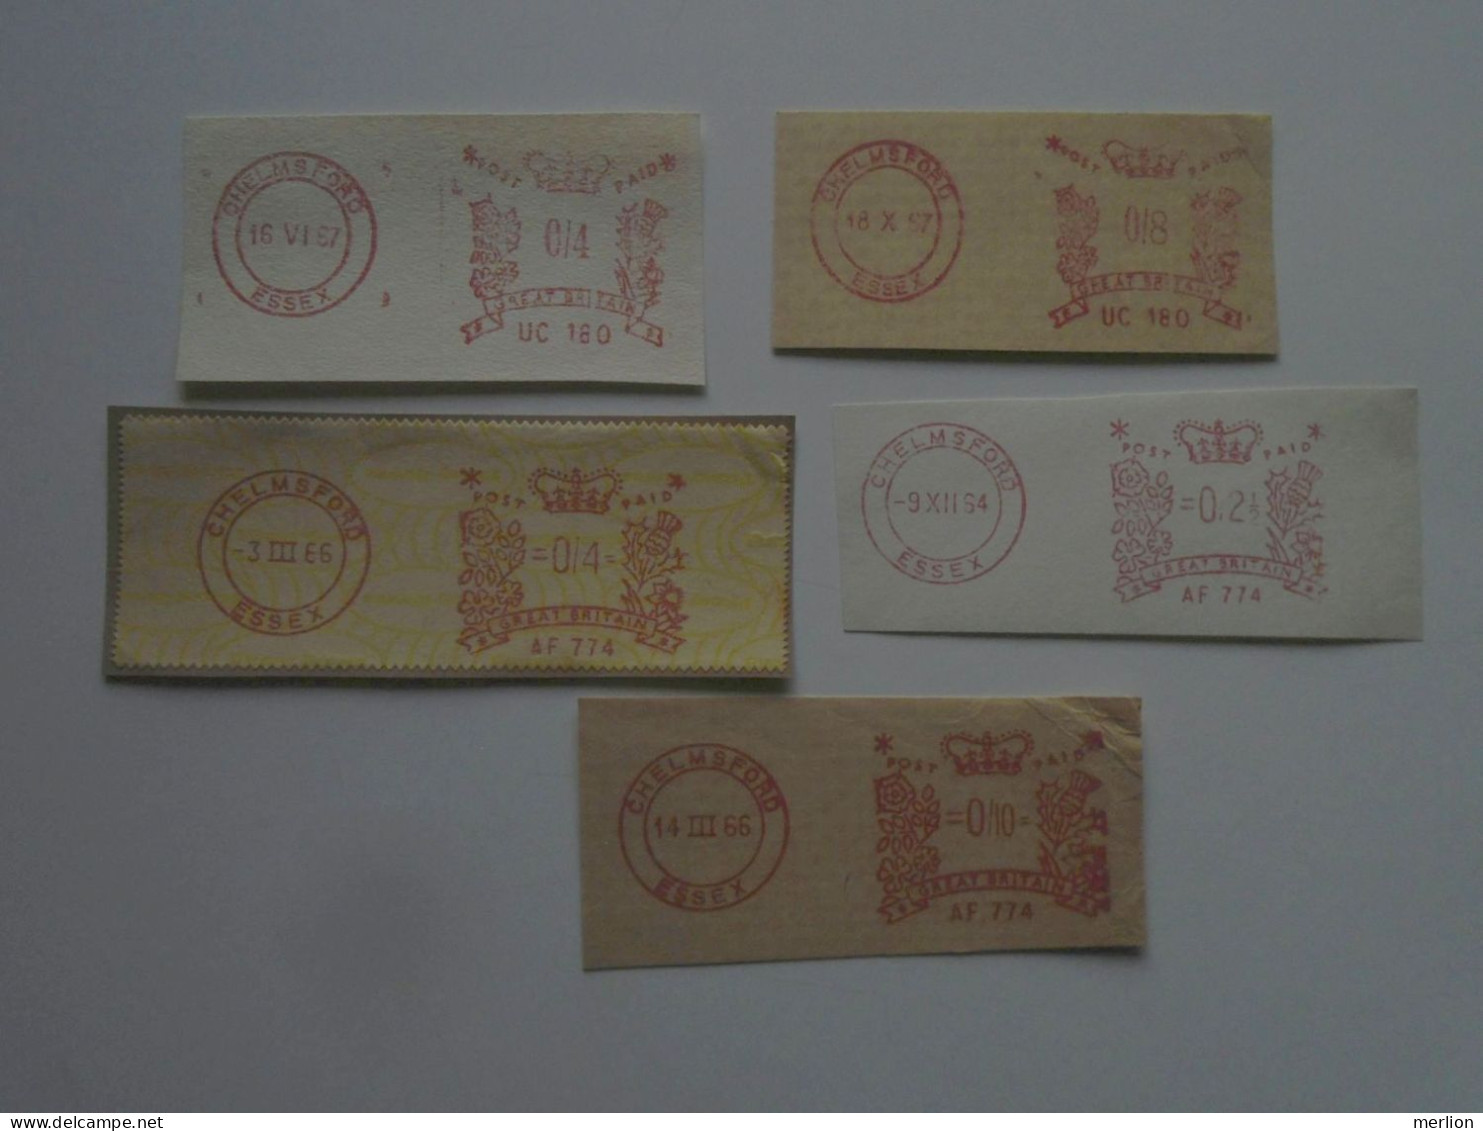 D200499  Red  Meter Stamp  Cut -EMA - Freistempel- UK - CHELMSFORD   1960's Lot Of 5 Pcs - Franking Machines (EMA)